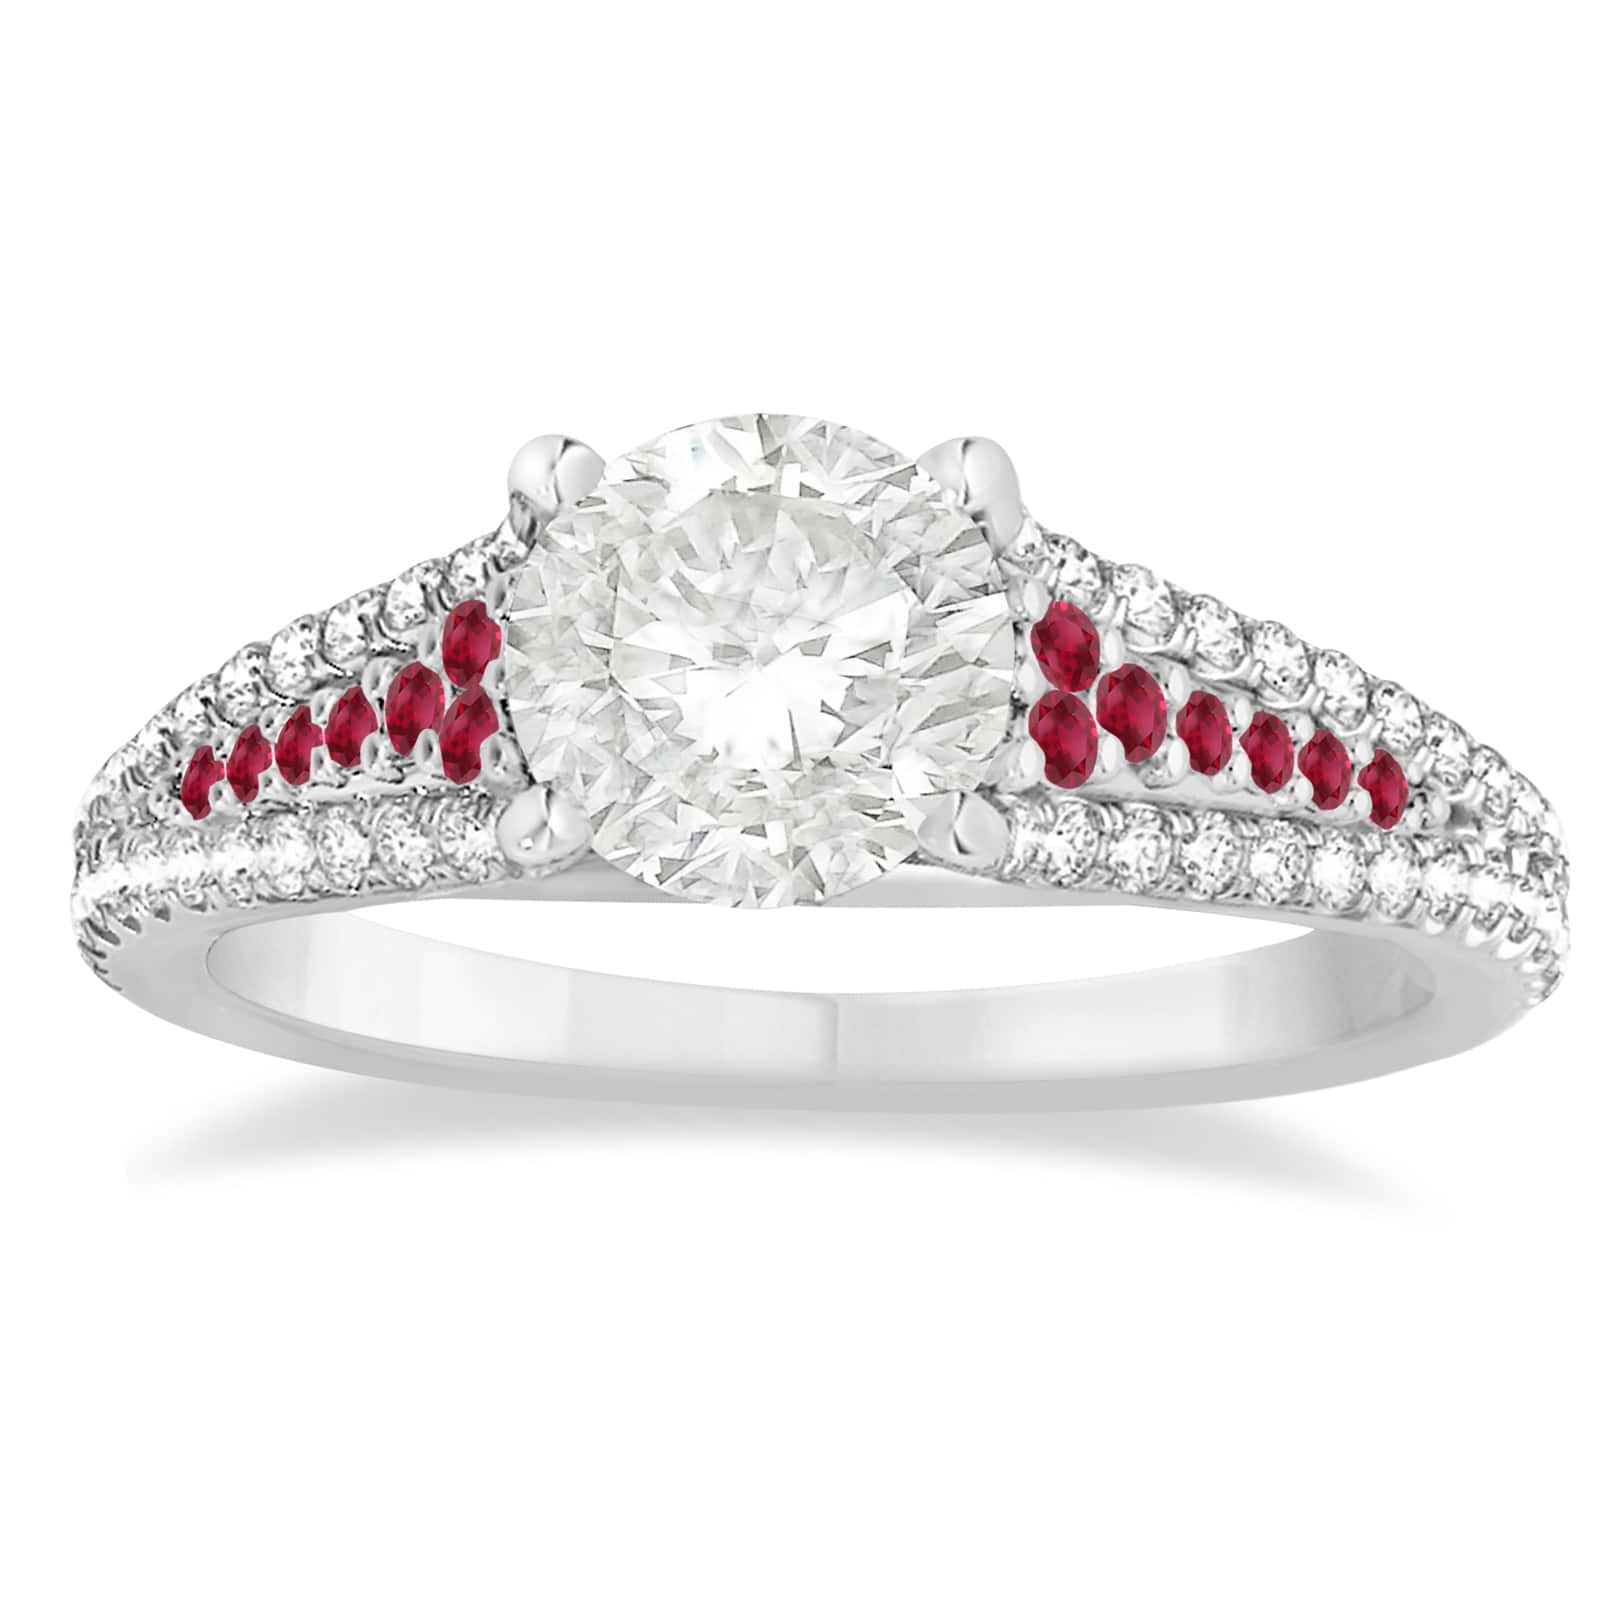 Ruby & Diamond Engagement Ring 18k White Gold (0.33ct)